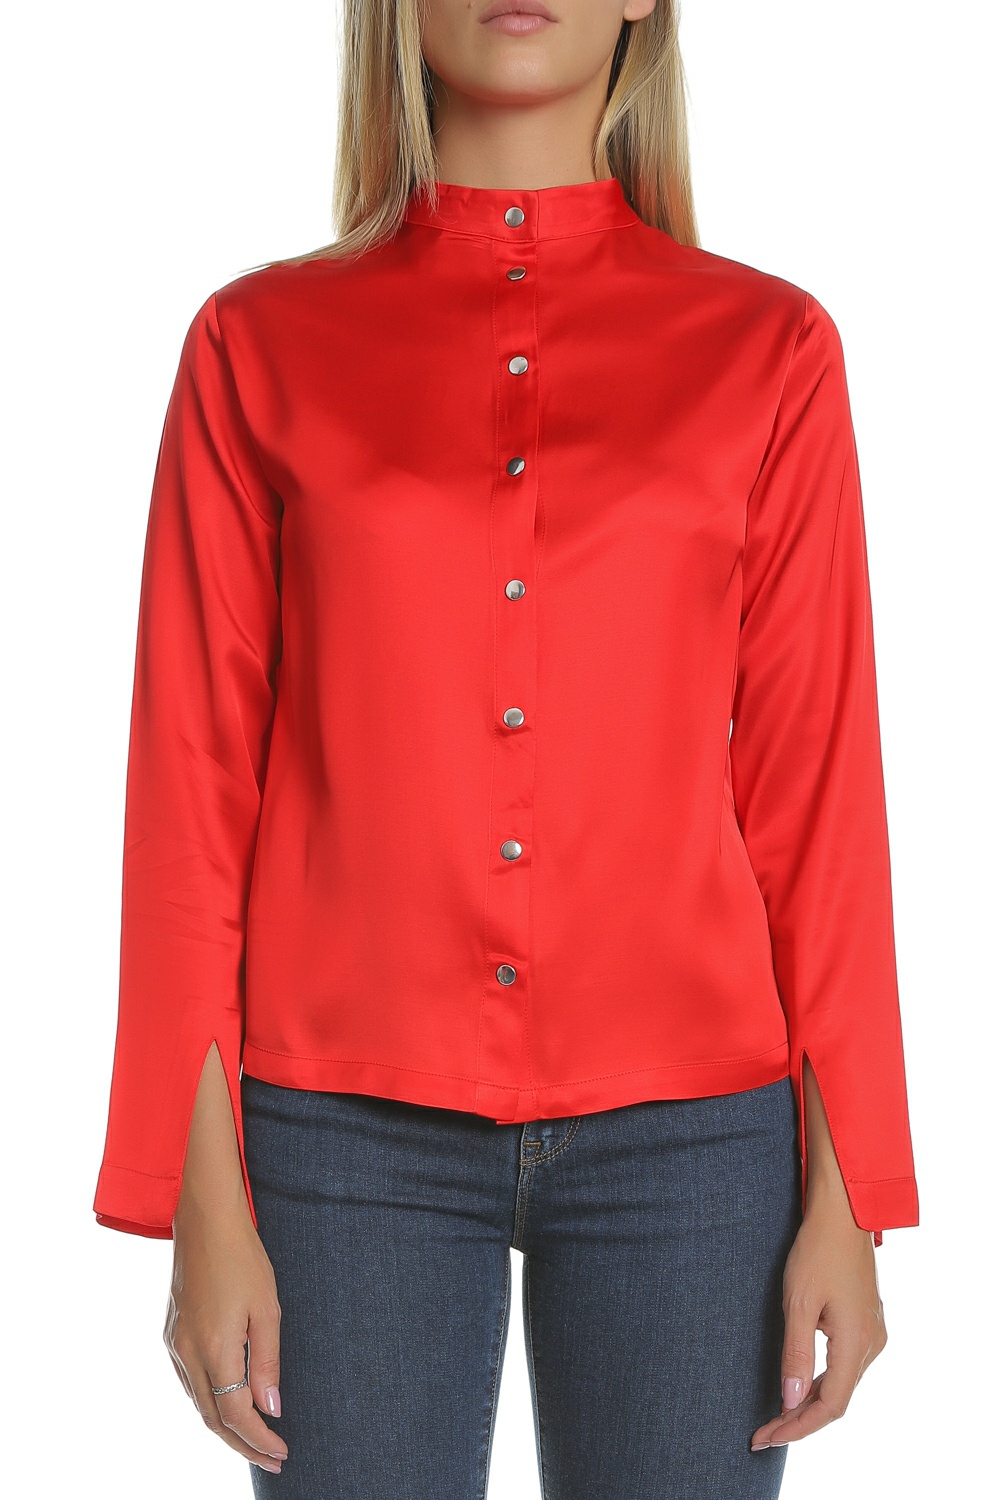 SCOTCH & SODA - Γυναικεία μακρυμάνικη μπλούζα με κουμπιά SCOTCH & SODA κόκκινη Γυναικεία/Ρούχα/Μπλούζες/Τοπ